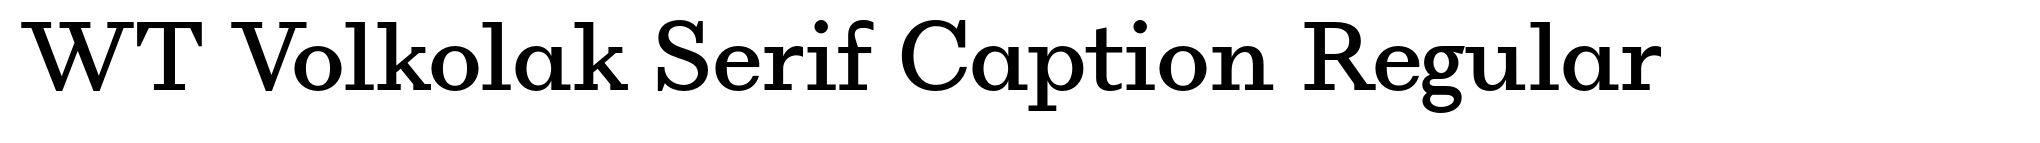 WT Volkolak Serif Caption Regular image